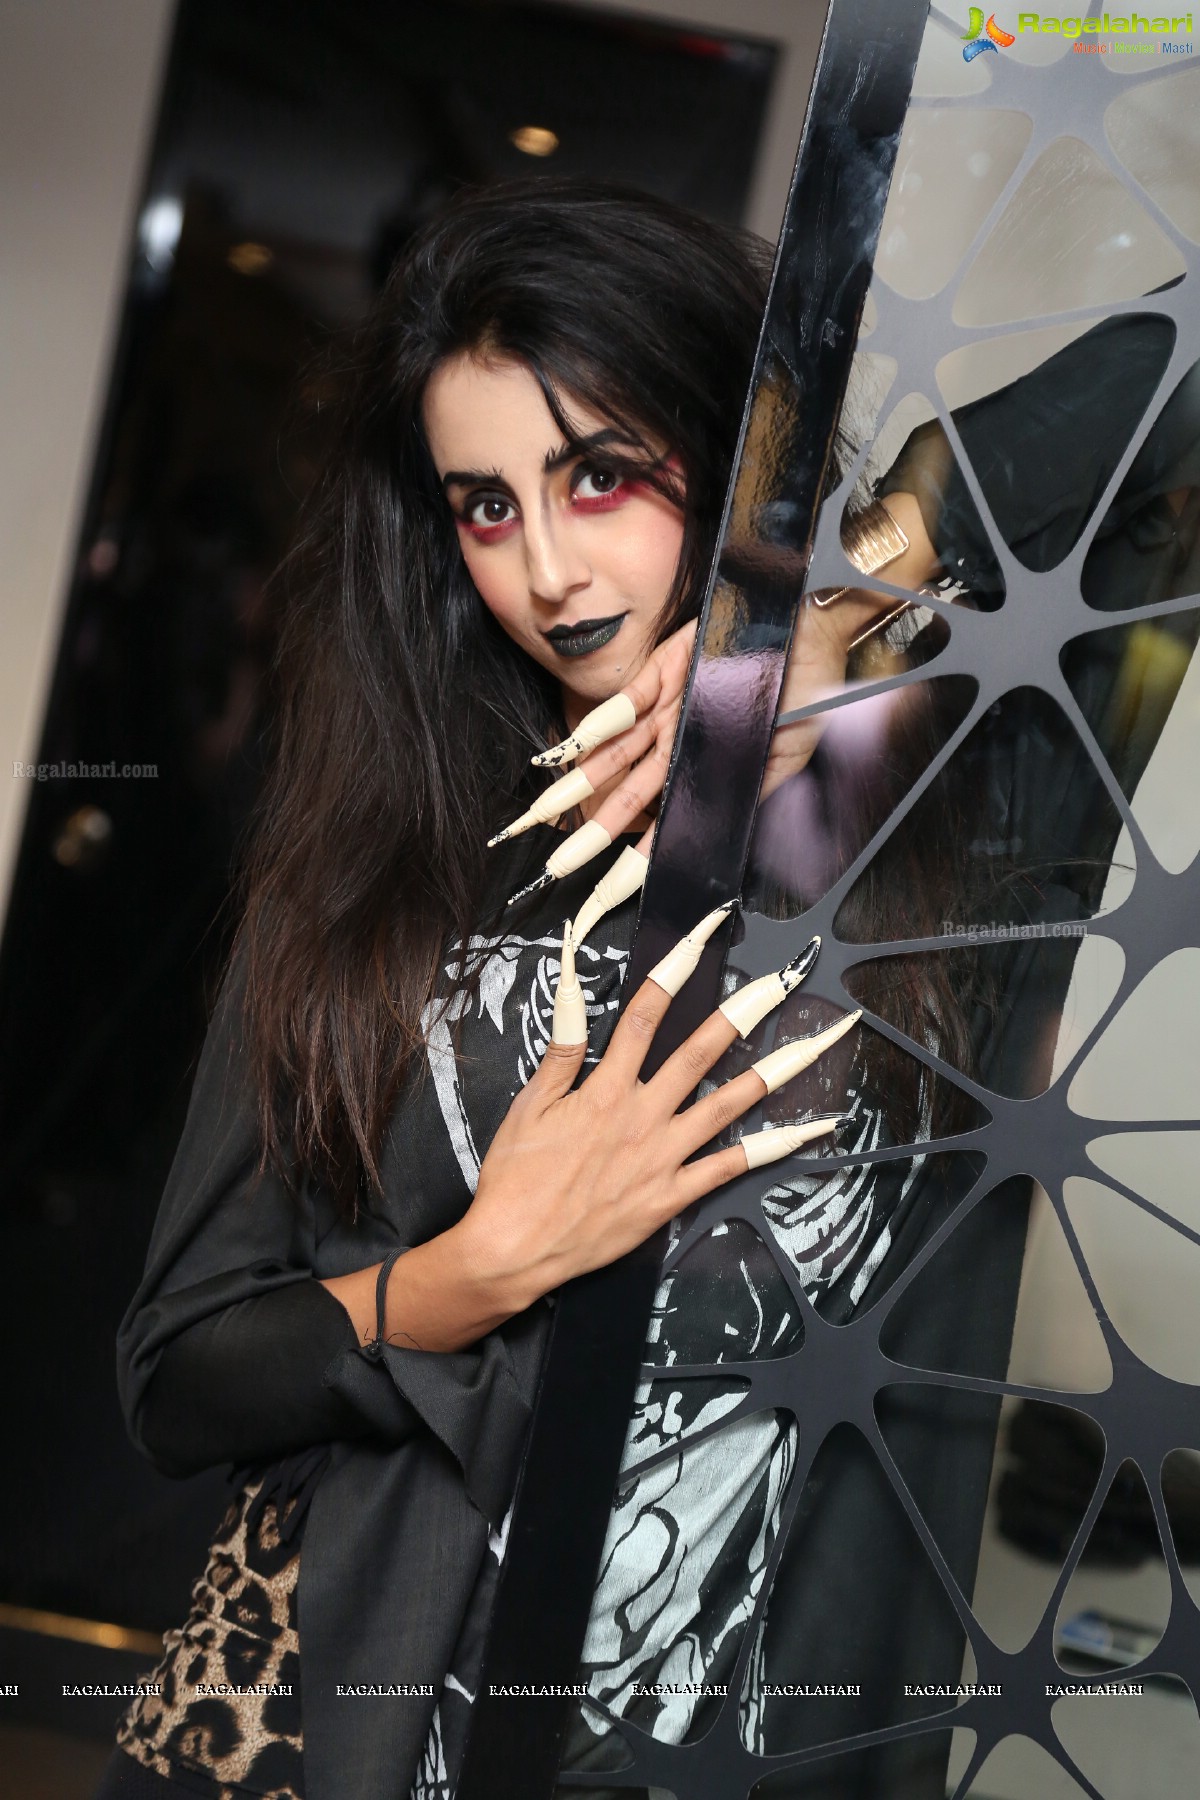 Sanjana at Happy Halloween at Mirrors